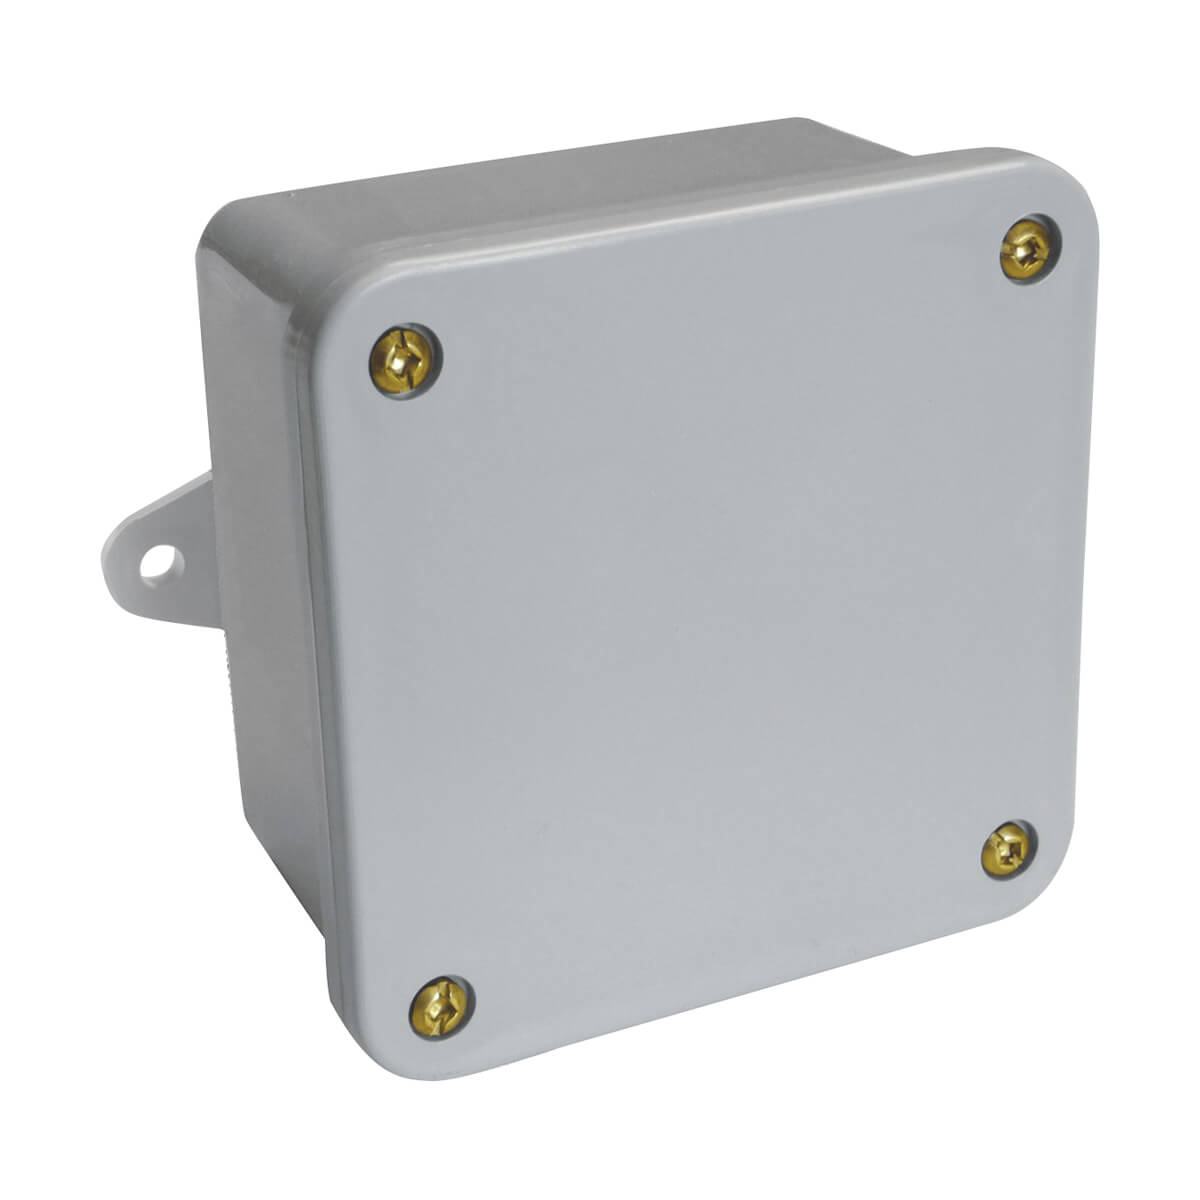 Ipex PVC Conduit Junction Box - 4-in x 4-in x 2-in